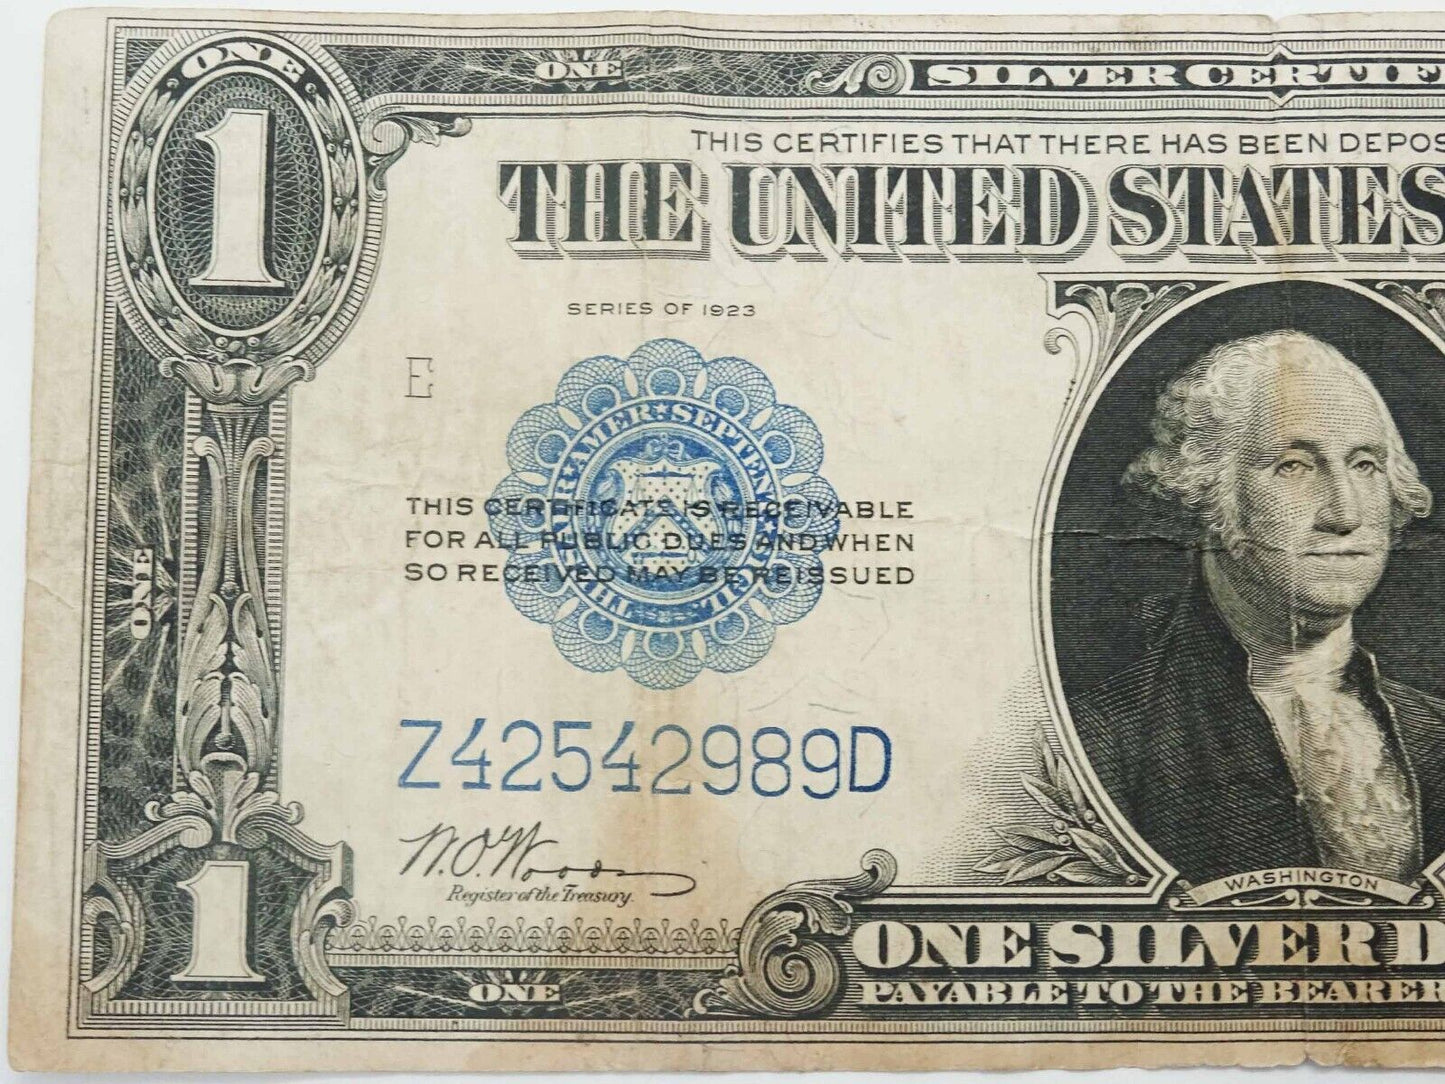 1923 $1 Silver Certificate Large Note Z42542989D Fine